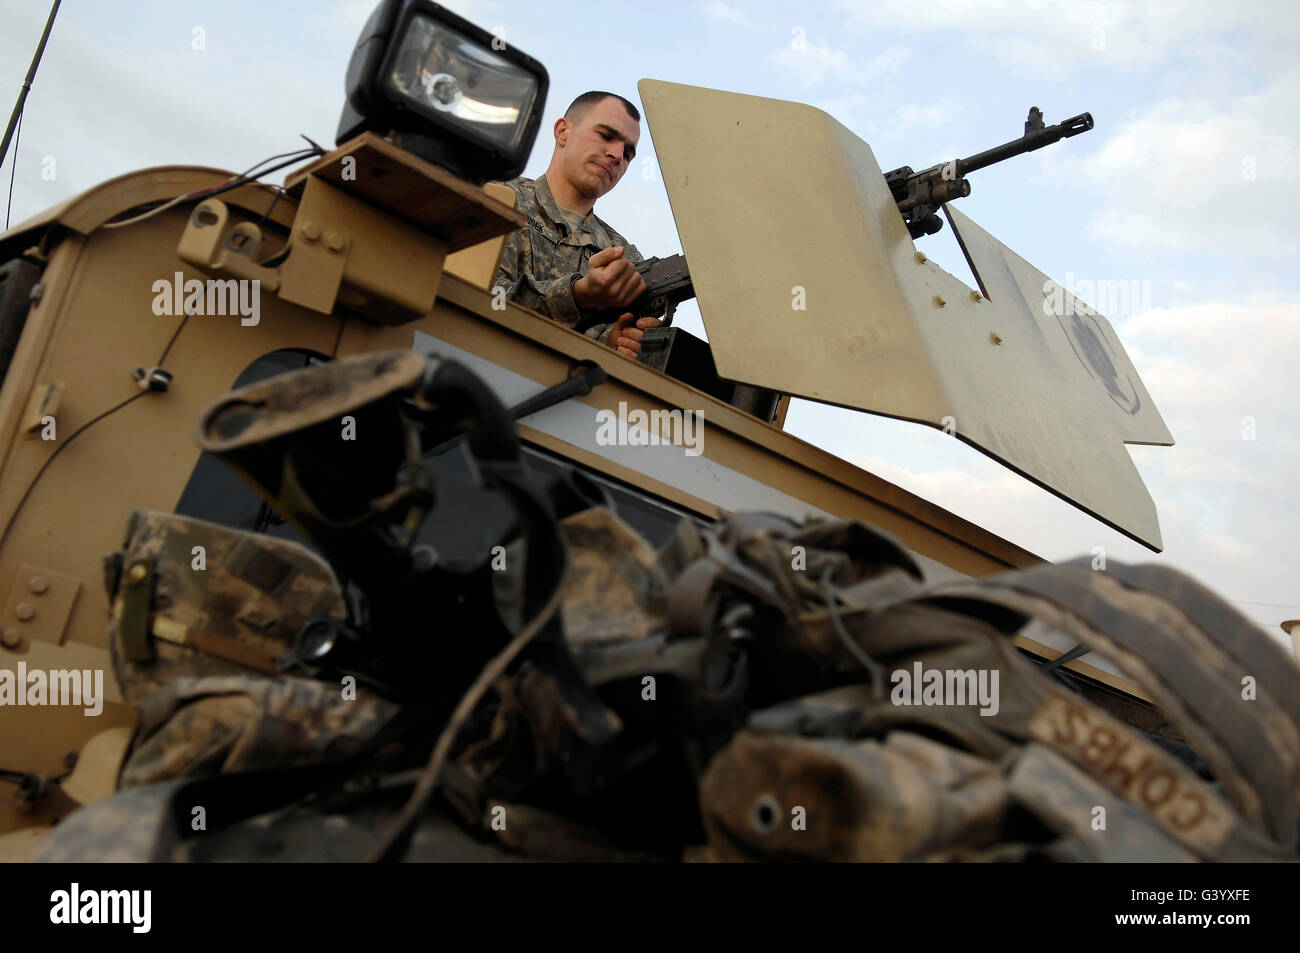 U.S. Army Specialist prepares his weapon atop a humvee. Stock Photo